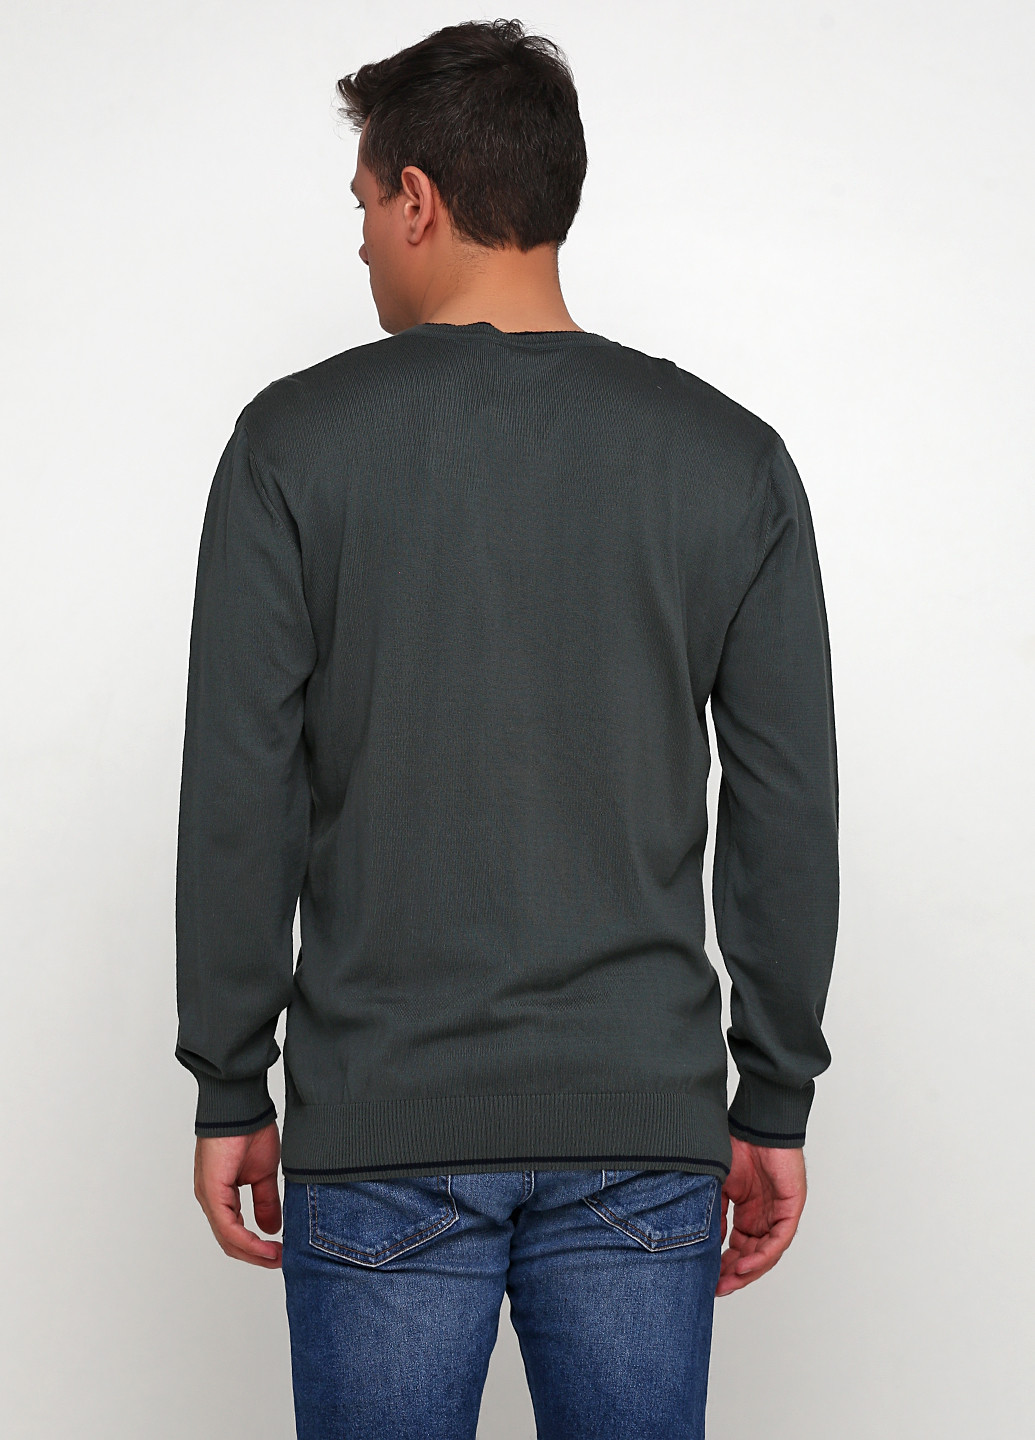 Оливковый (хаки) зимний пуловер пуловер Vip Stones